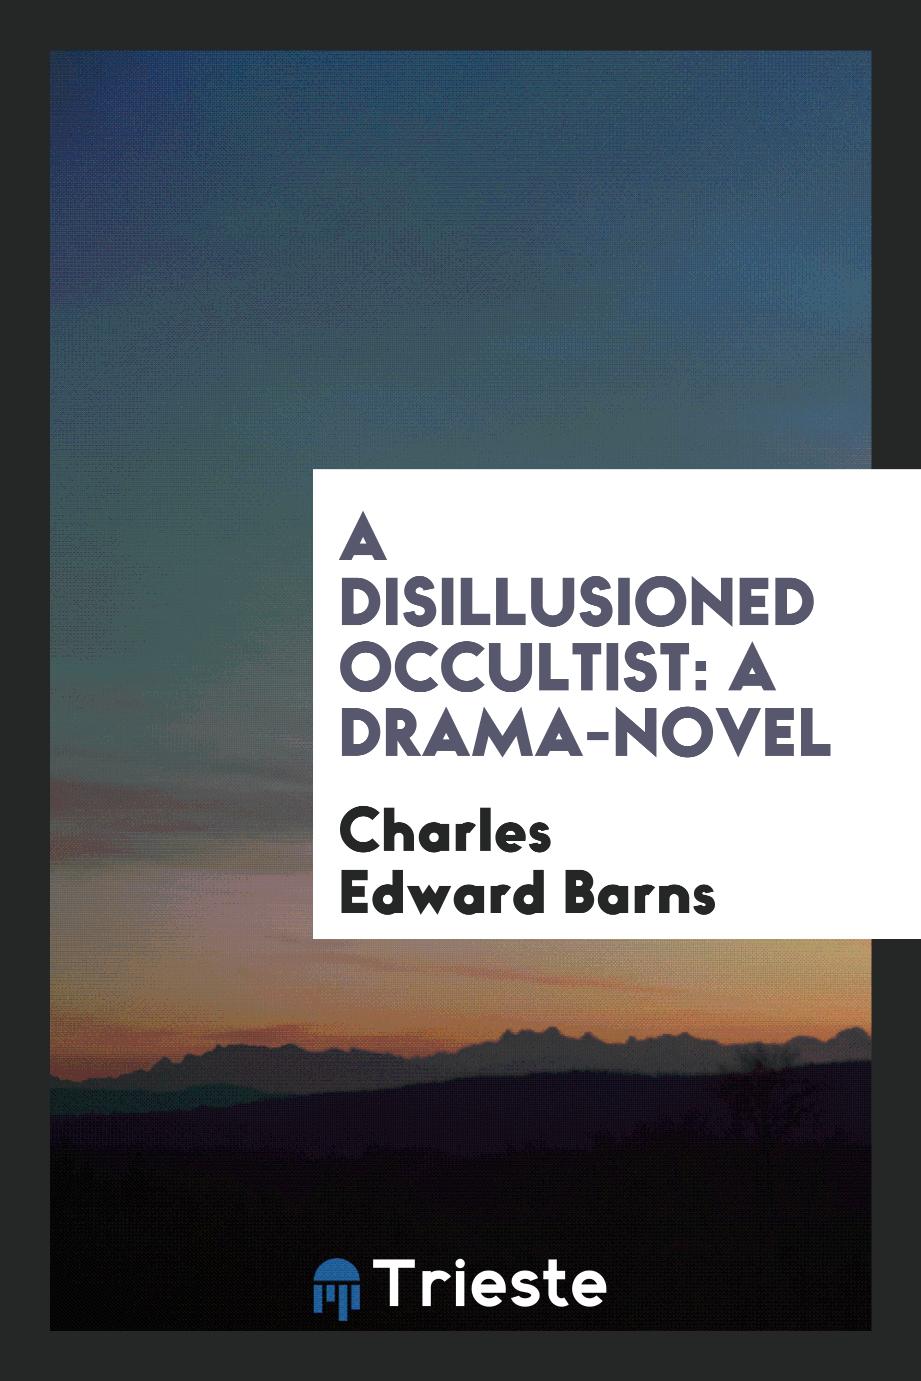 A Disillusioned Occultist: A Drama-Novel